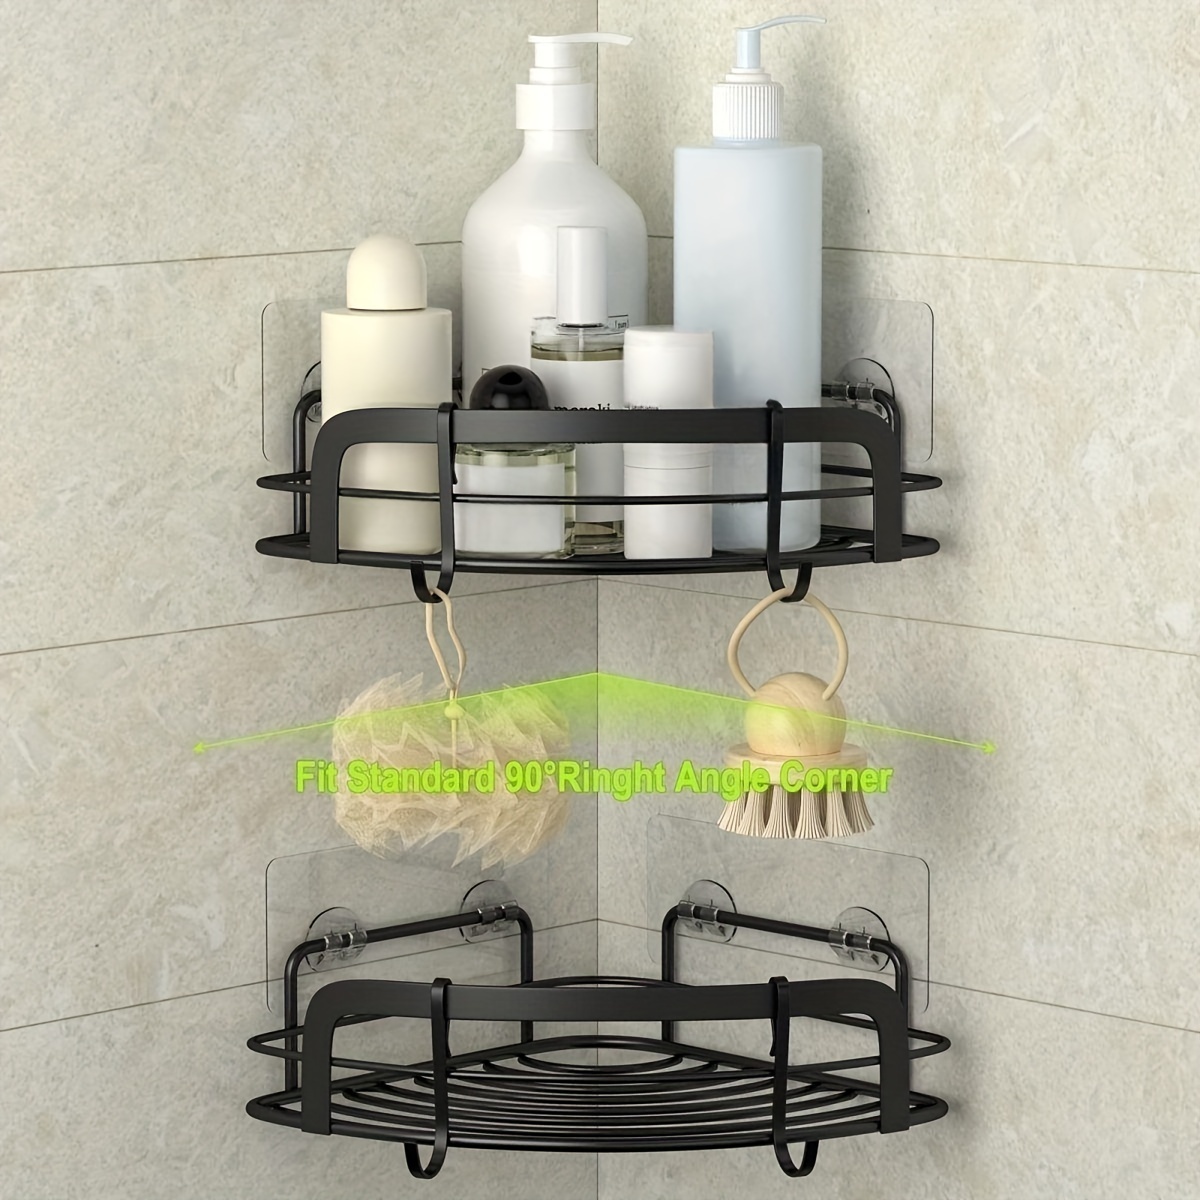  stusgo Corner Shower Caddy, Adhesive Corner Shower Shelves  Shampoo Holder Bathroom Shower Shelfs, Rust-Proof Stainless Steel Shower  Organizer Corner with 4 Hooks, 2 Pack : Home & Kitchen